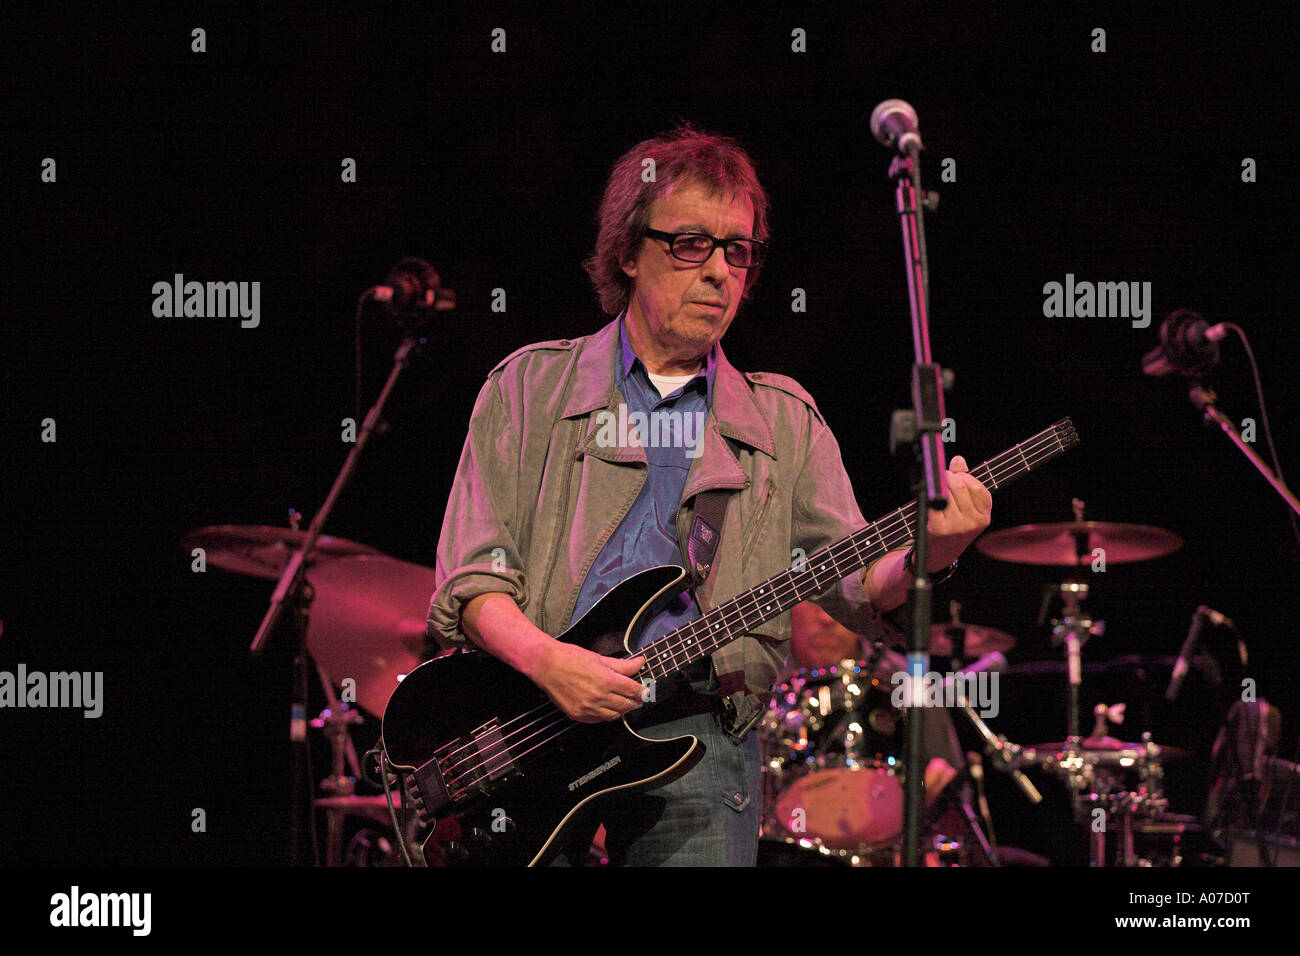 Fotografia di stock di Bill Wyman playing electric bass guitar Foto Stock